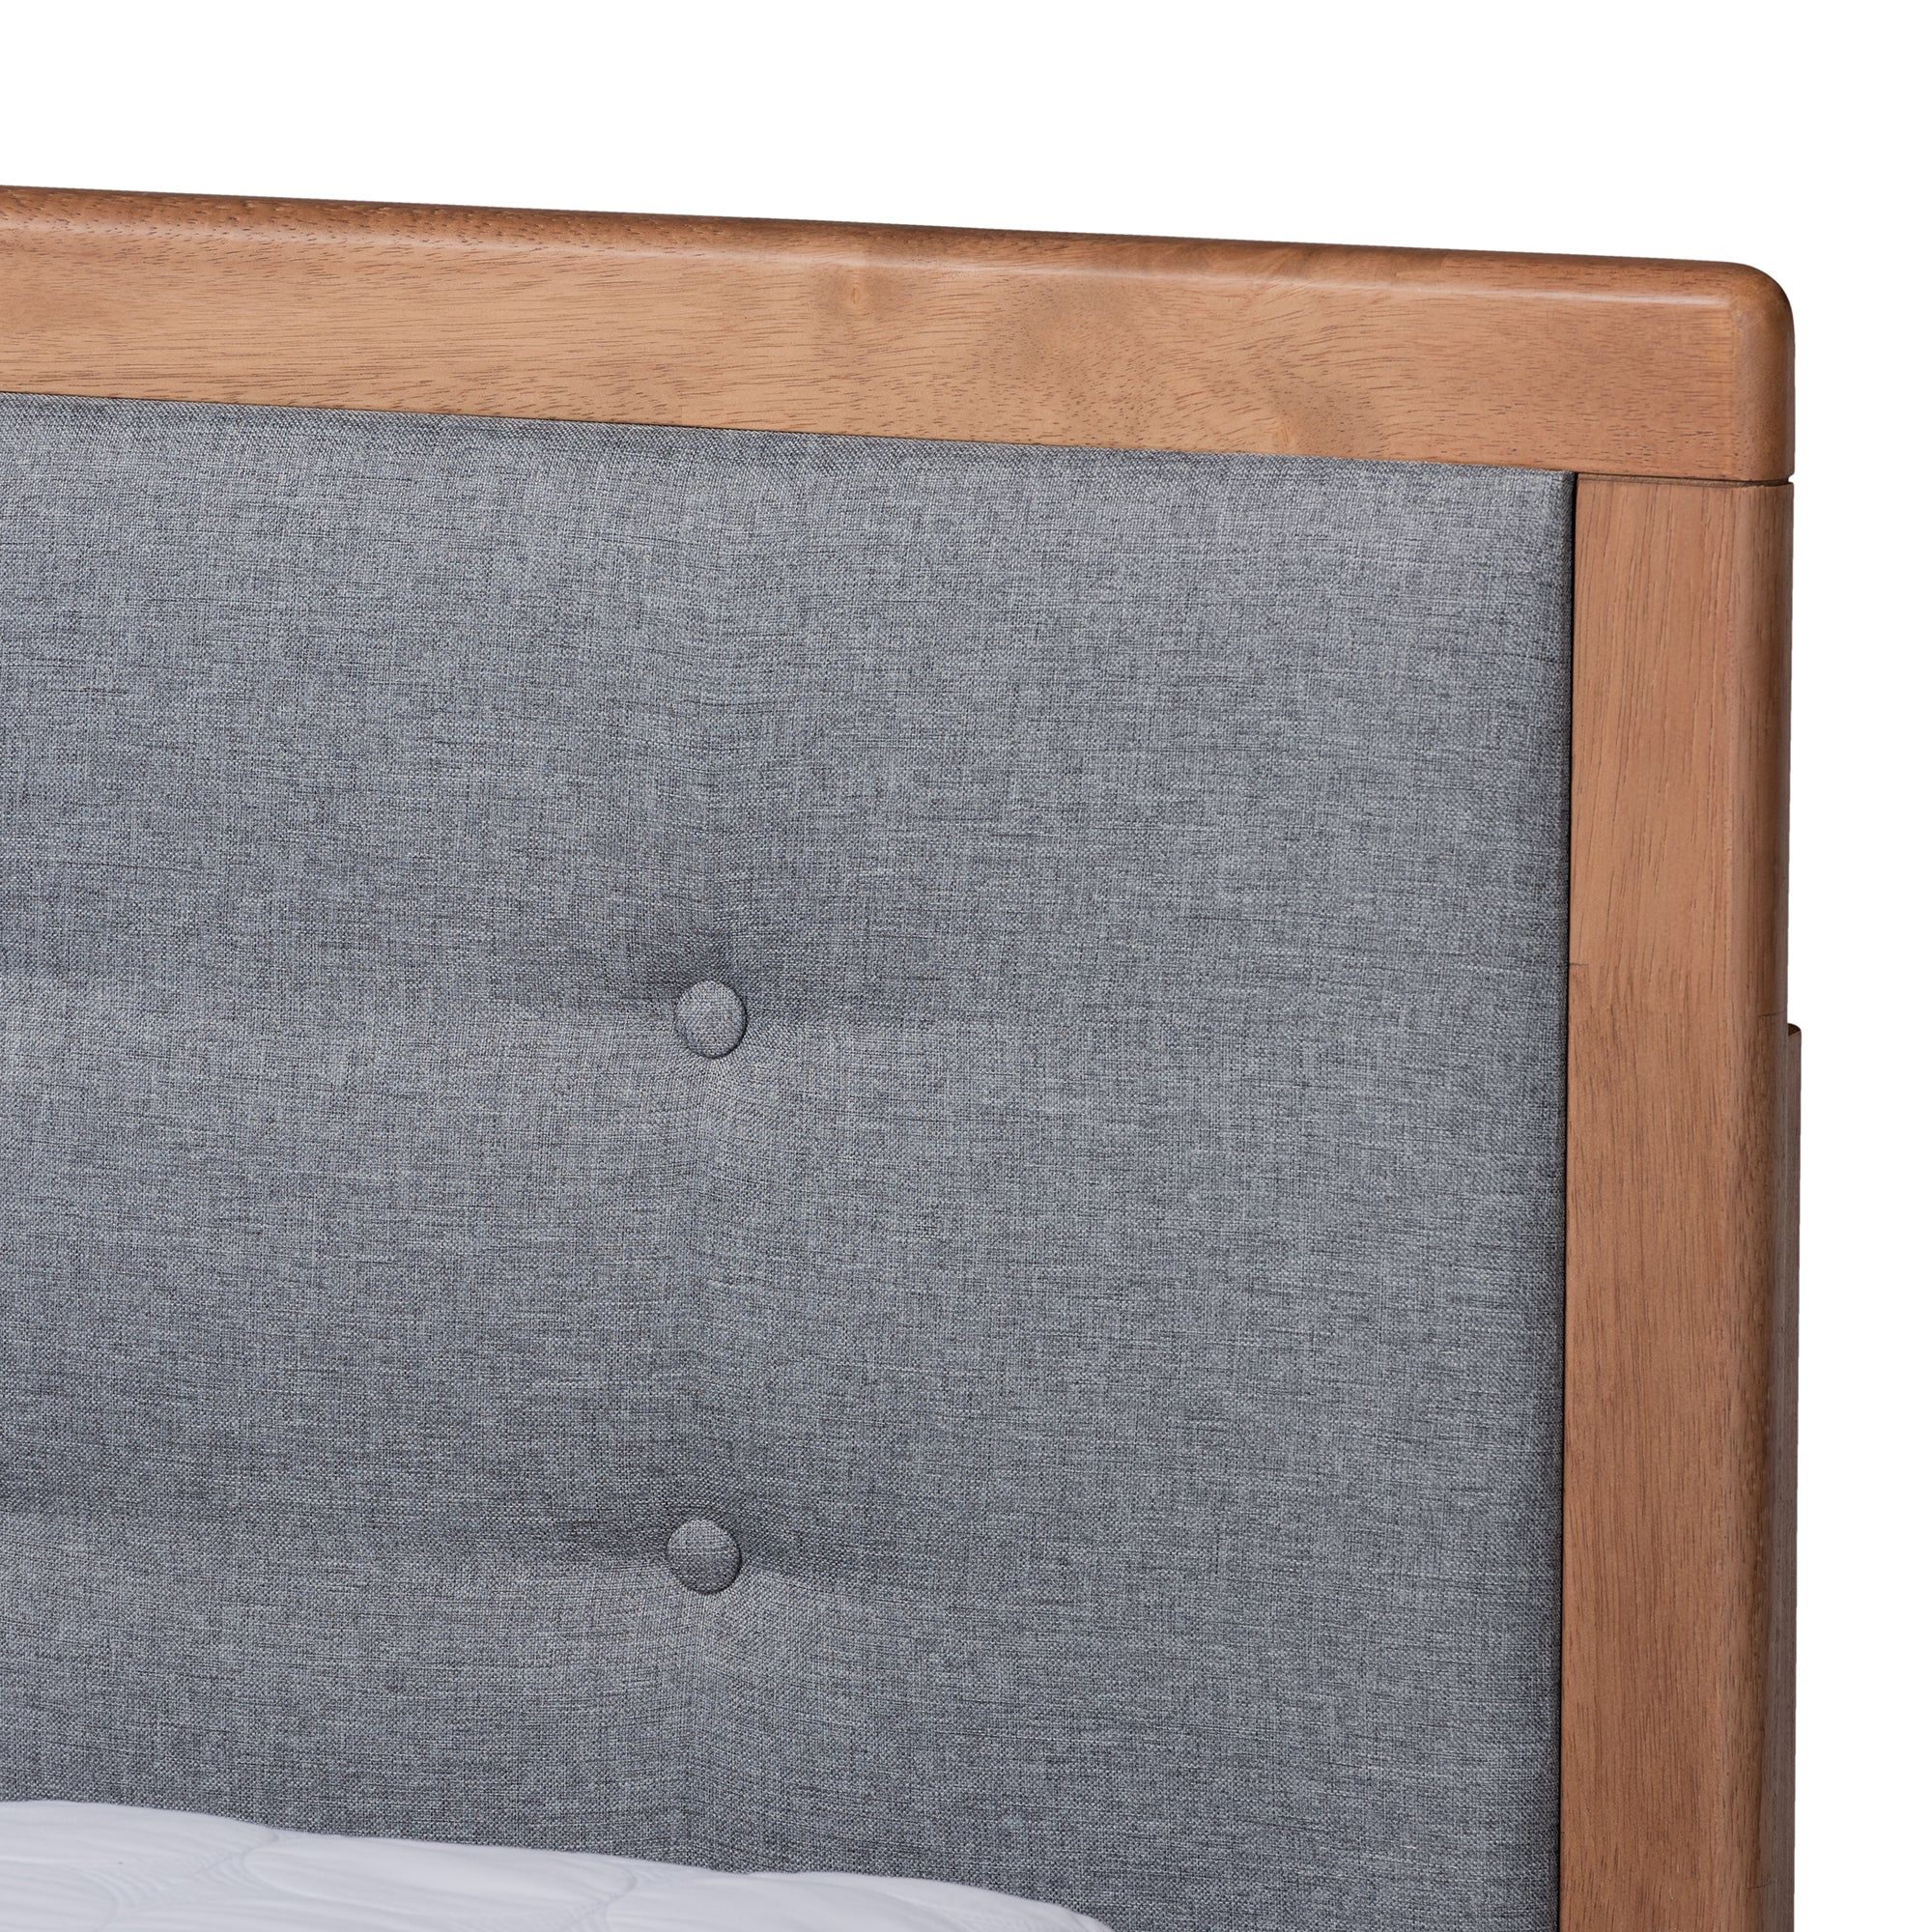 Lene Modern Bed 3-Drawer-Bed-Baxton Studio - WI-Wall2Wall Furnishings